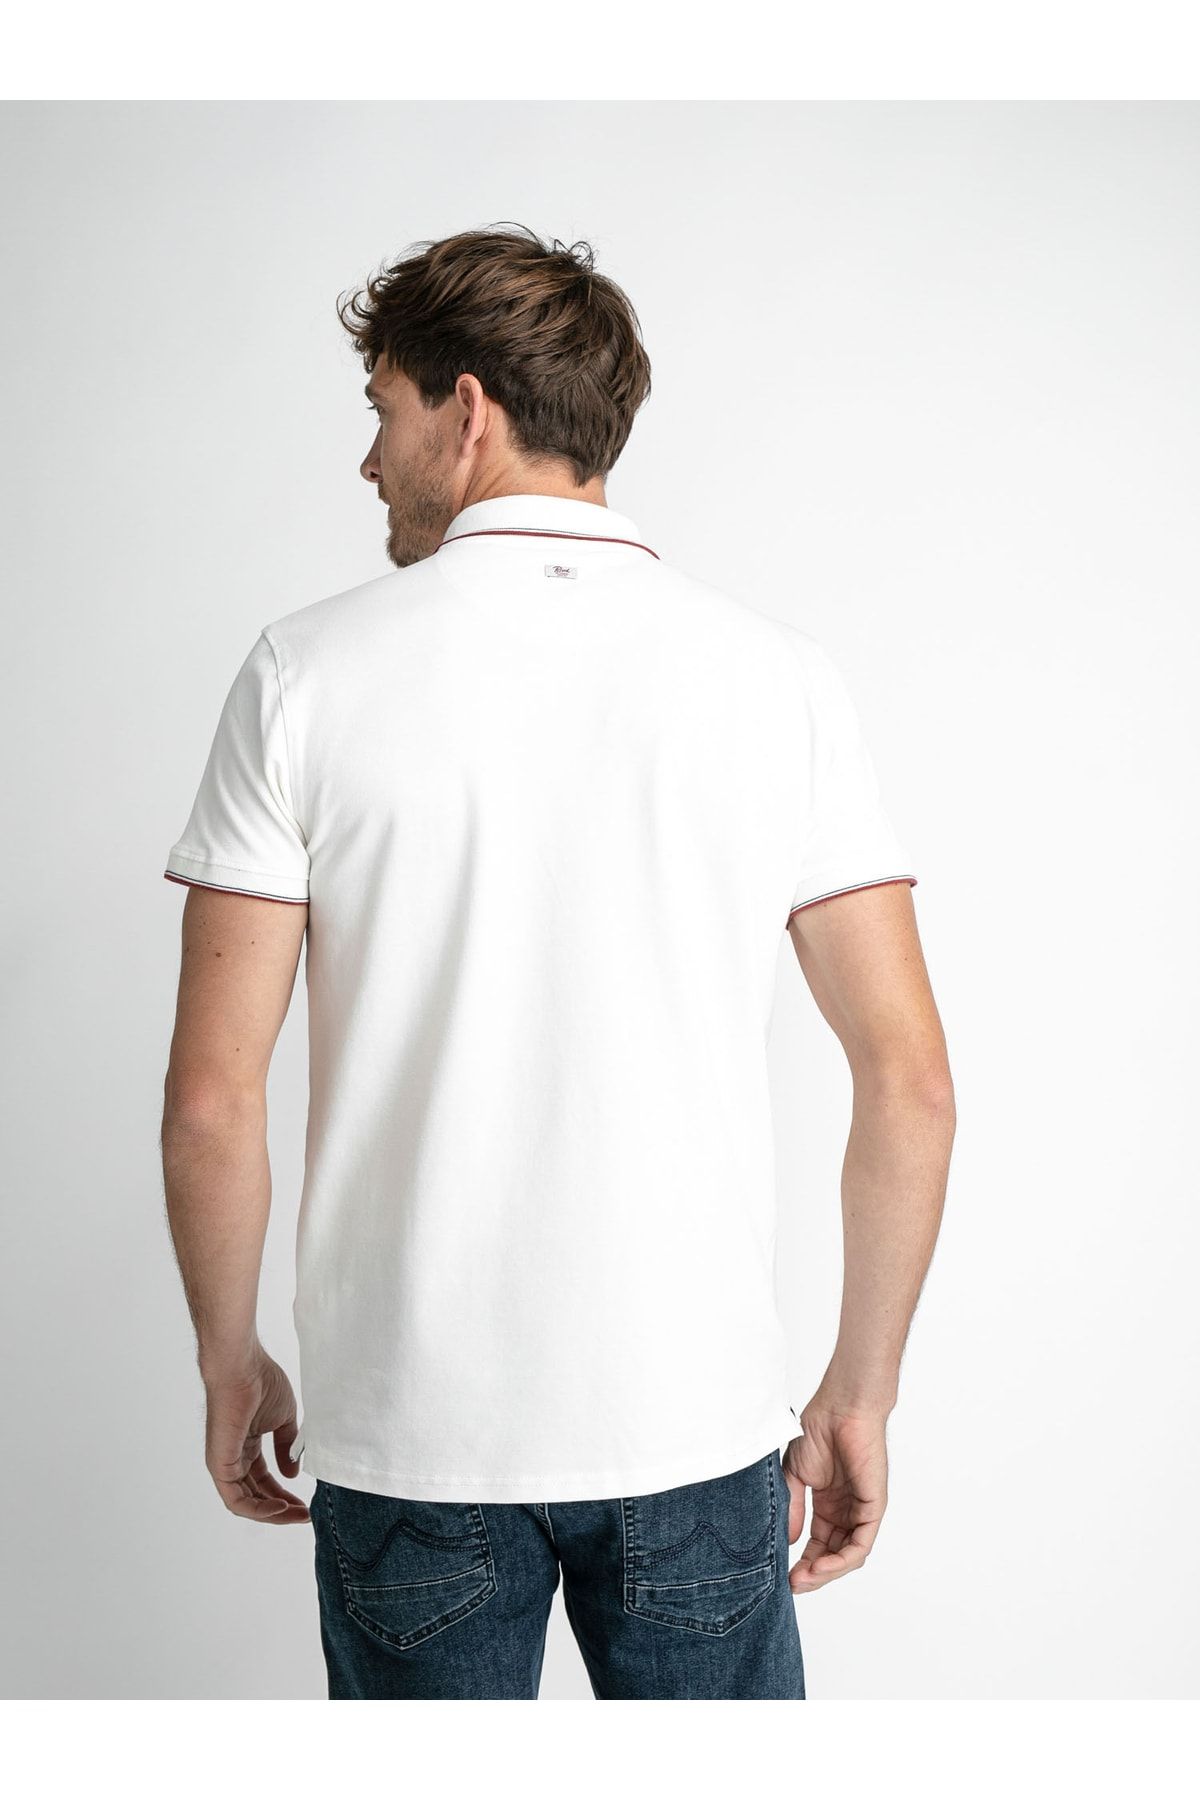 Trendyol fit - Industries - - T-shirt Regular White Petrol Polo